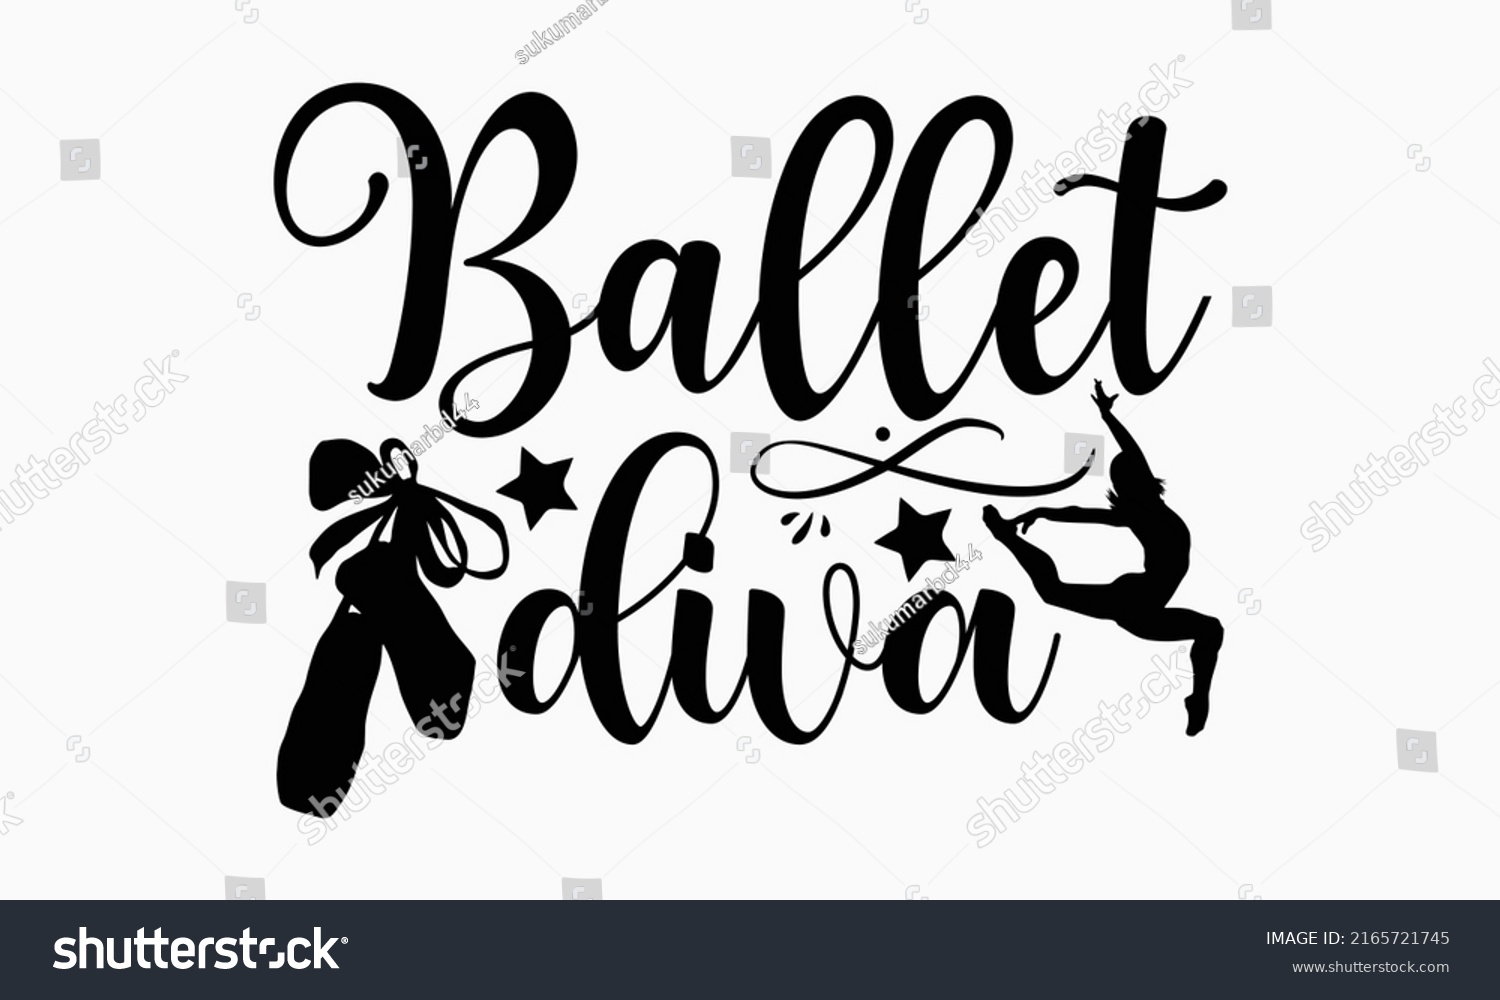 SVG of Ballet diva - Ballet t shirt design, SVG Files for Cutting, Handmade calligraphy vector illustration, Hand written vector sign, EPS svg